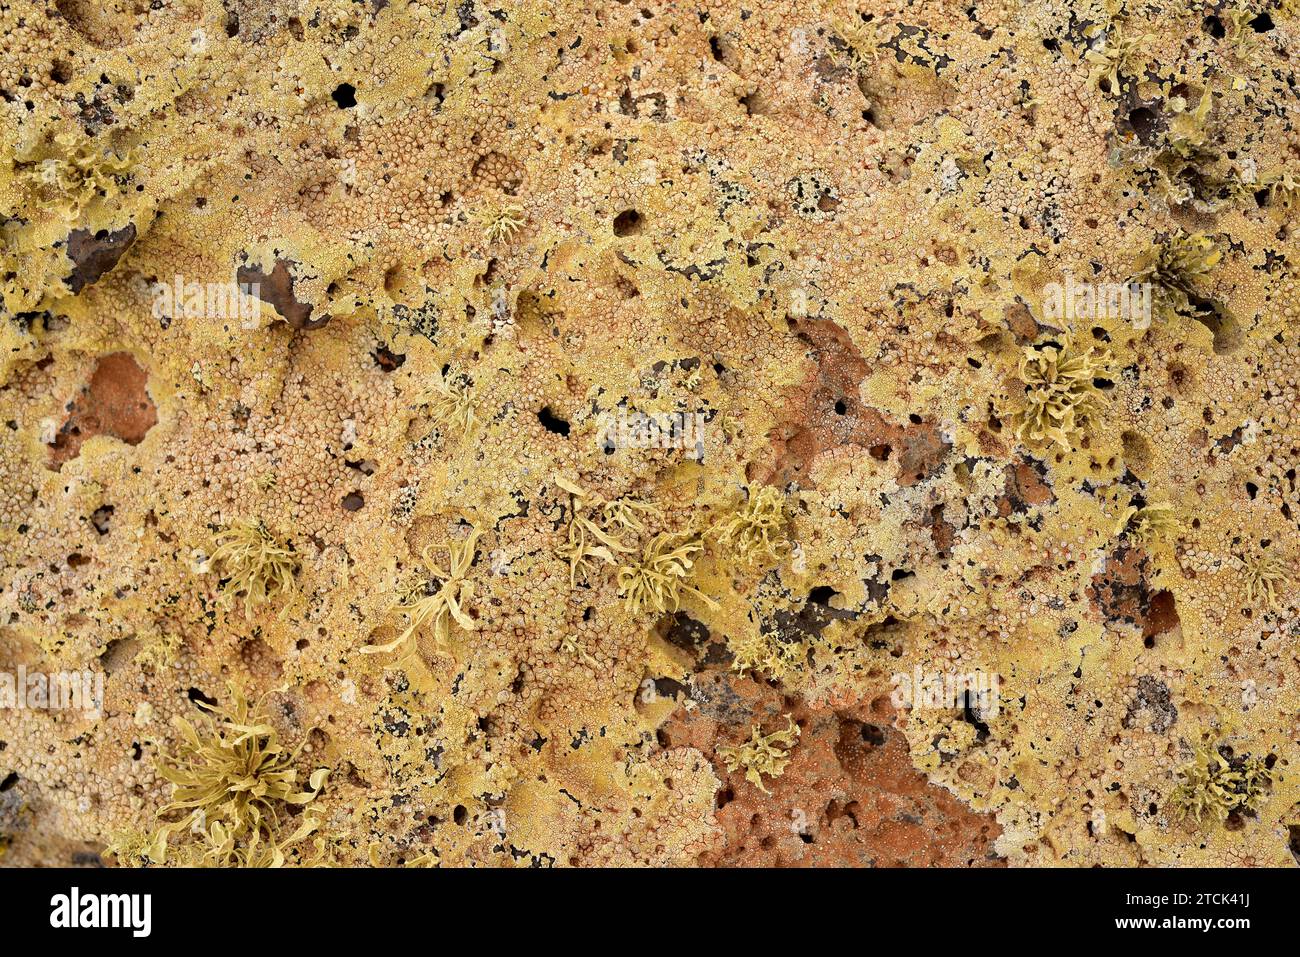 Pertusaria pluripuncta is a crustose lichen with apothecia and Ramalina, fruticulose lichen. This photo was taken in Lanzarote Island, Canary Islands, Stock Photo